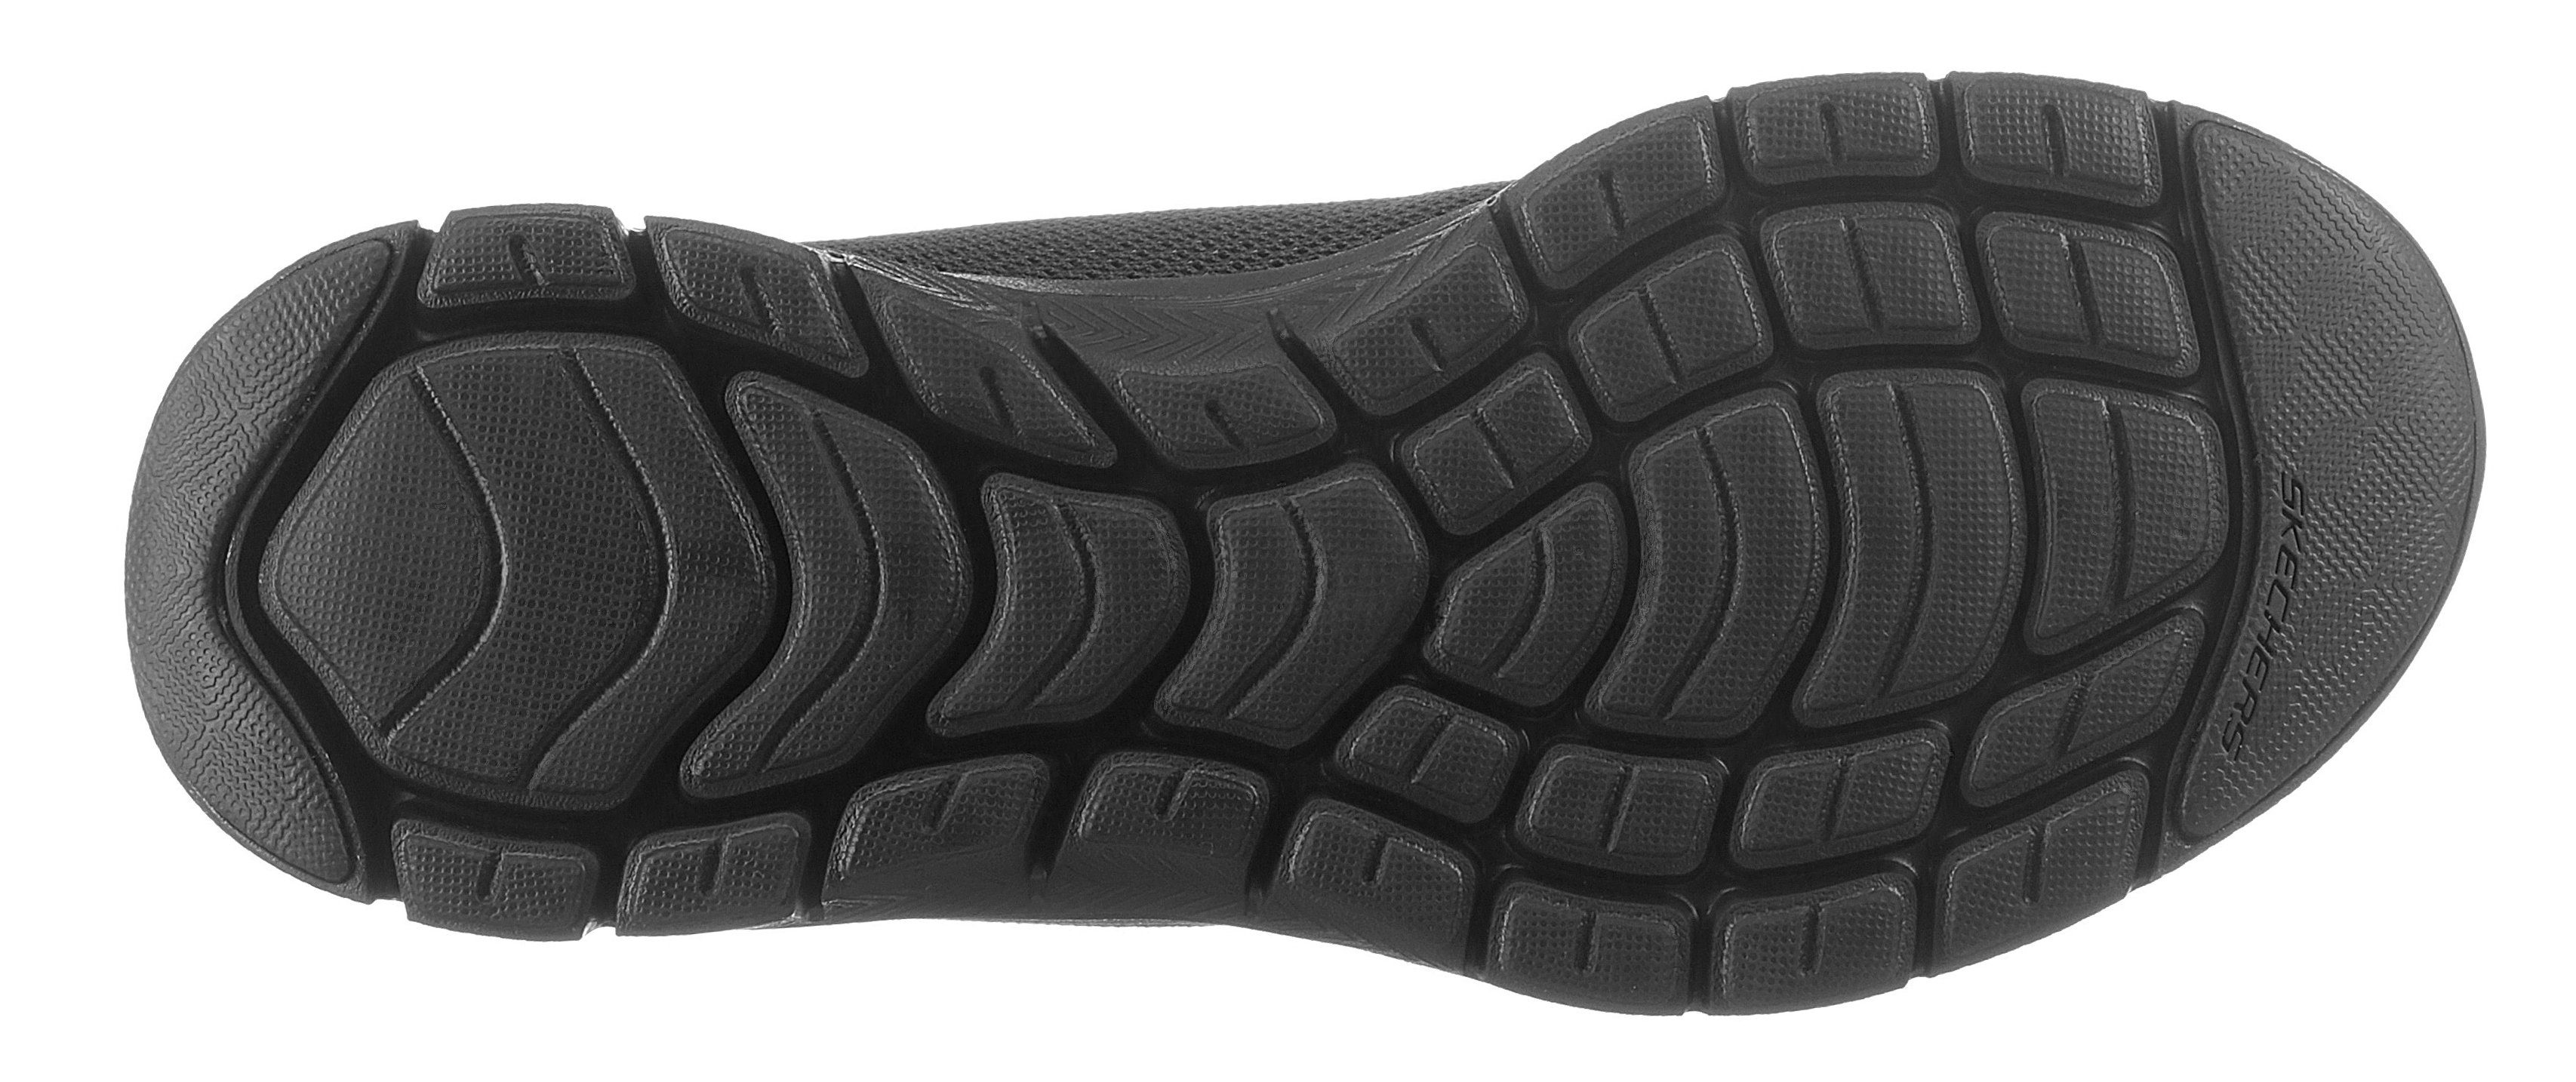 Sneaker BRILLINAT 4.0 Ausstattung schwarz FLEX Foam VIEW Air-Cooled APPEAL Memory mit Skechers